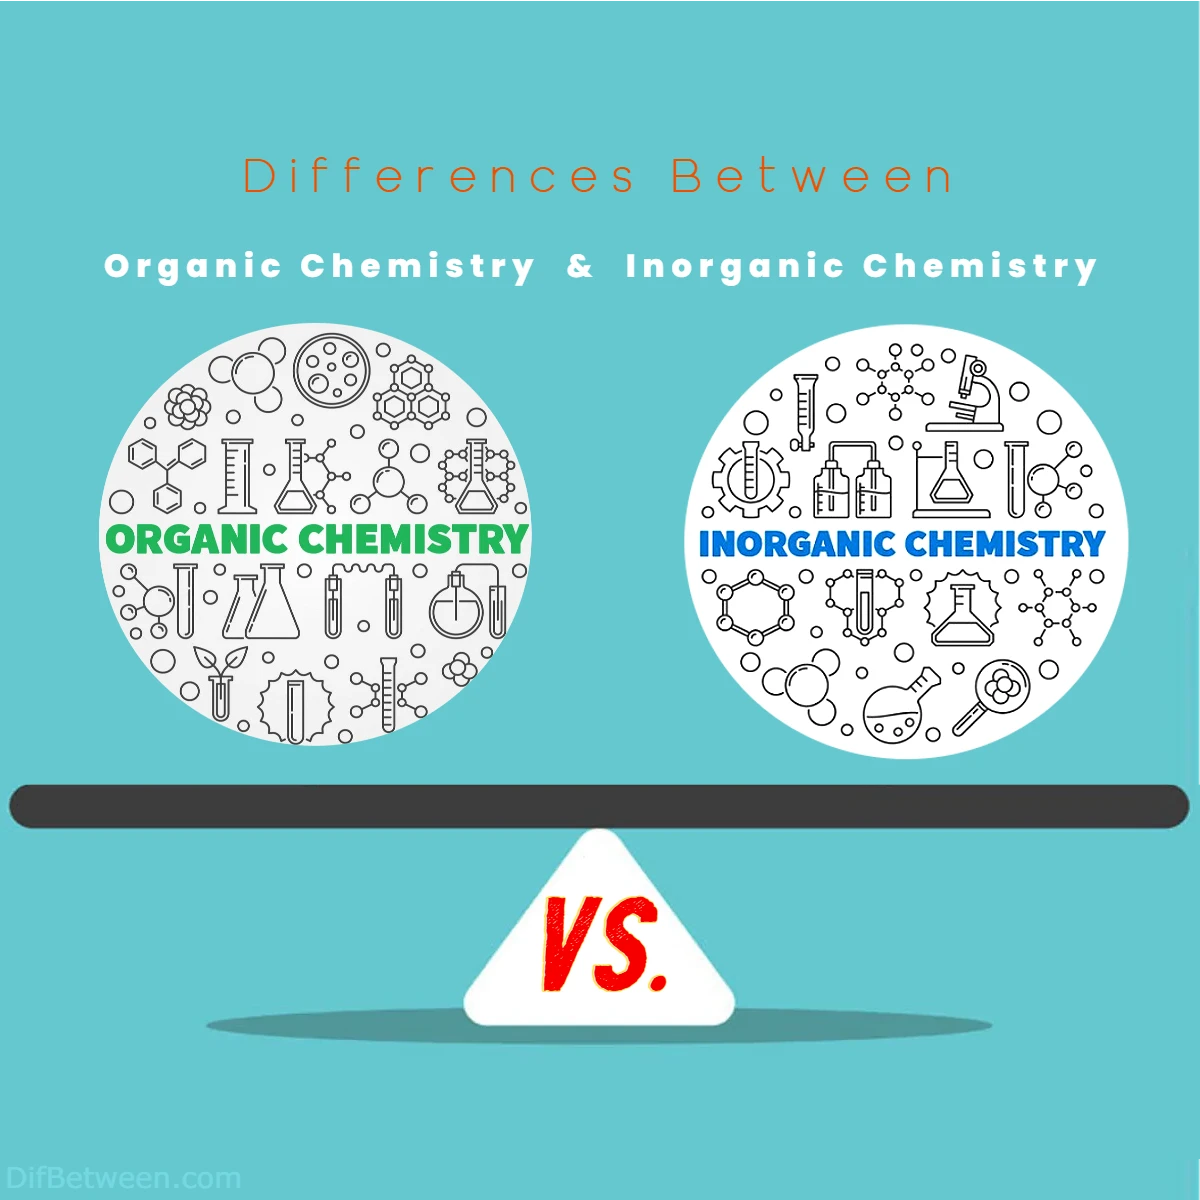 Differences Between Organic Chemistry vs Inorganic Chemistry